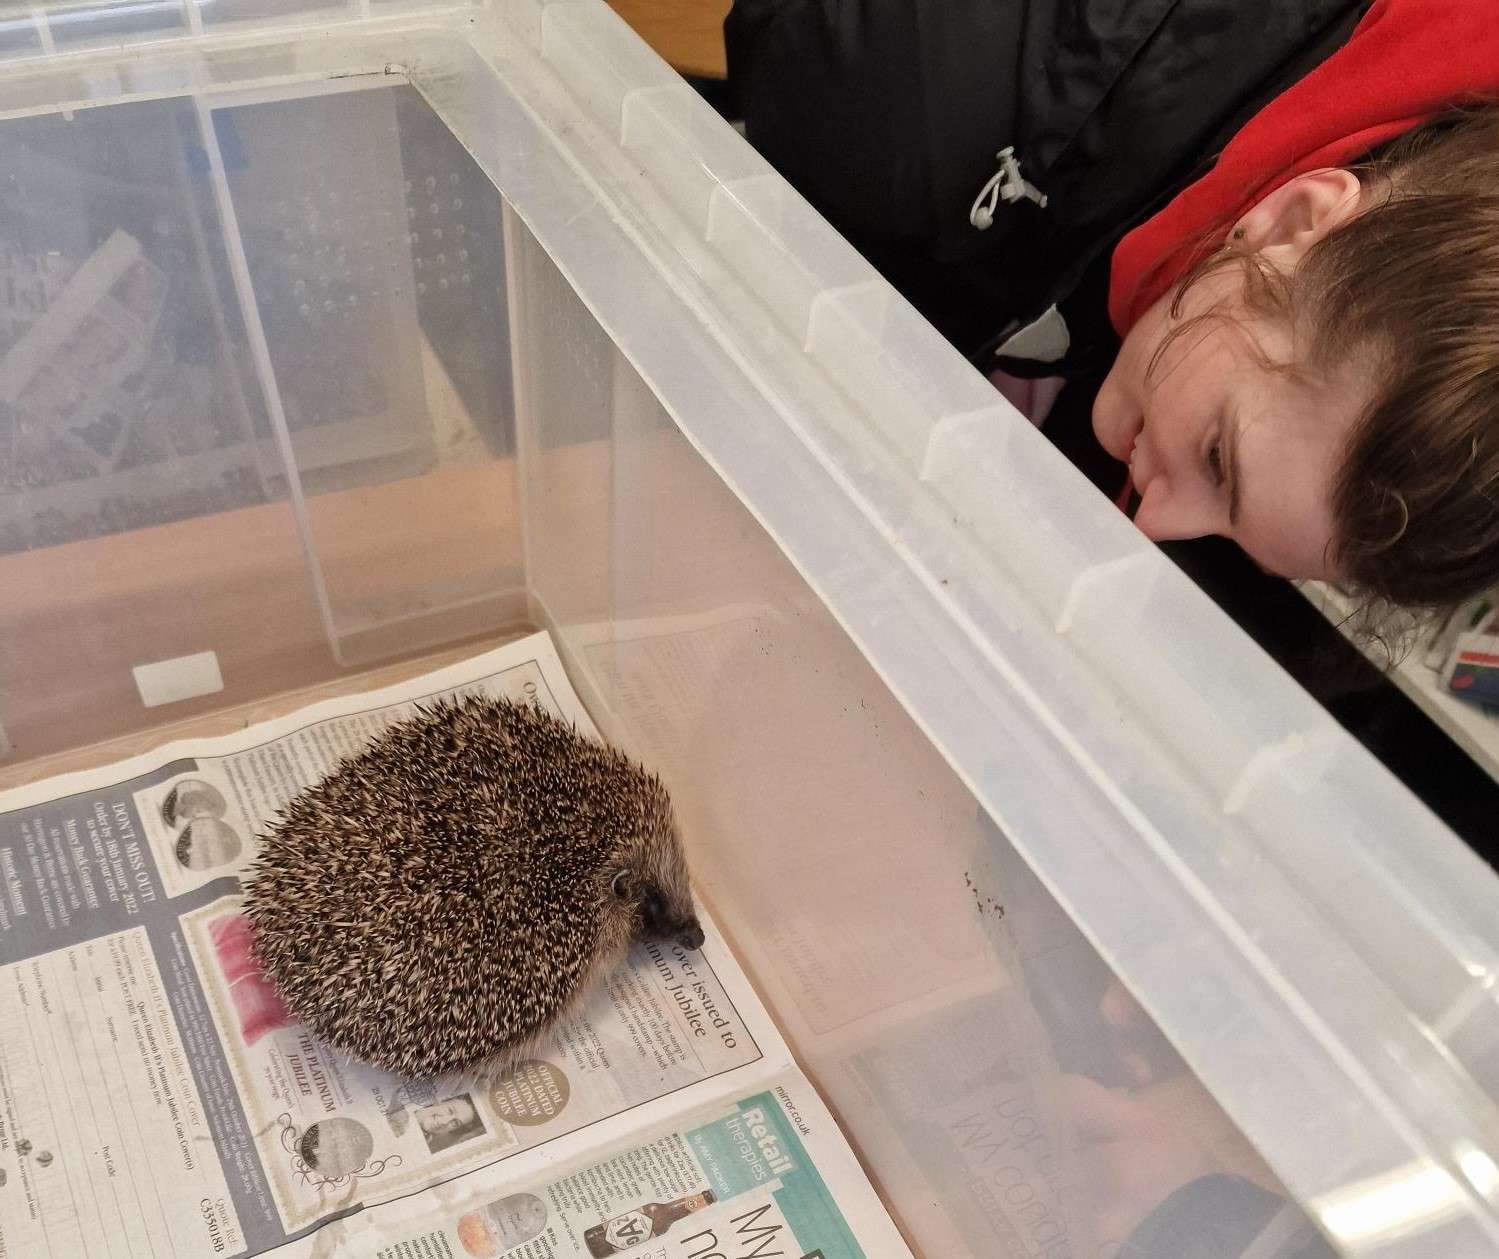 Kara checks on the progress of a recovering hedgehog